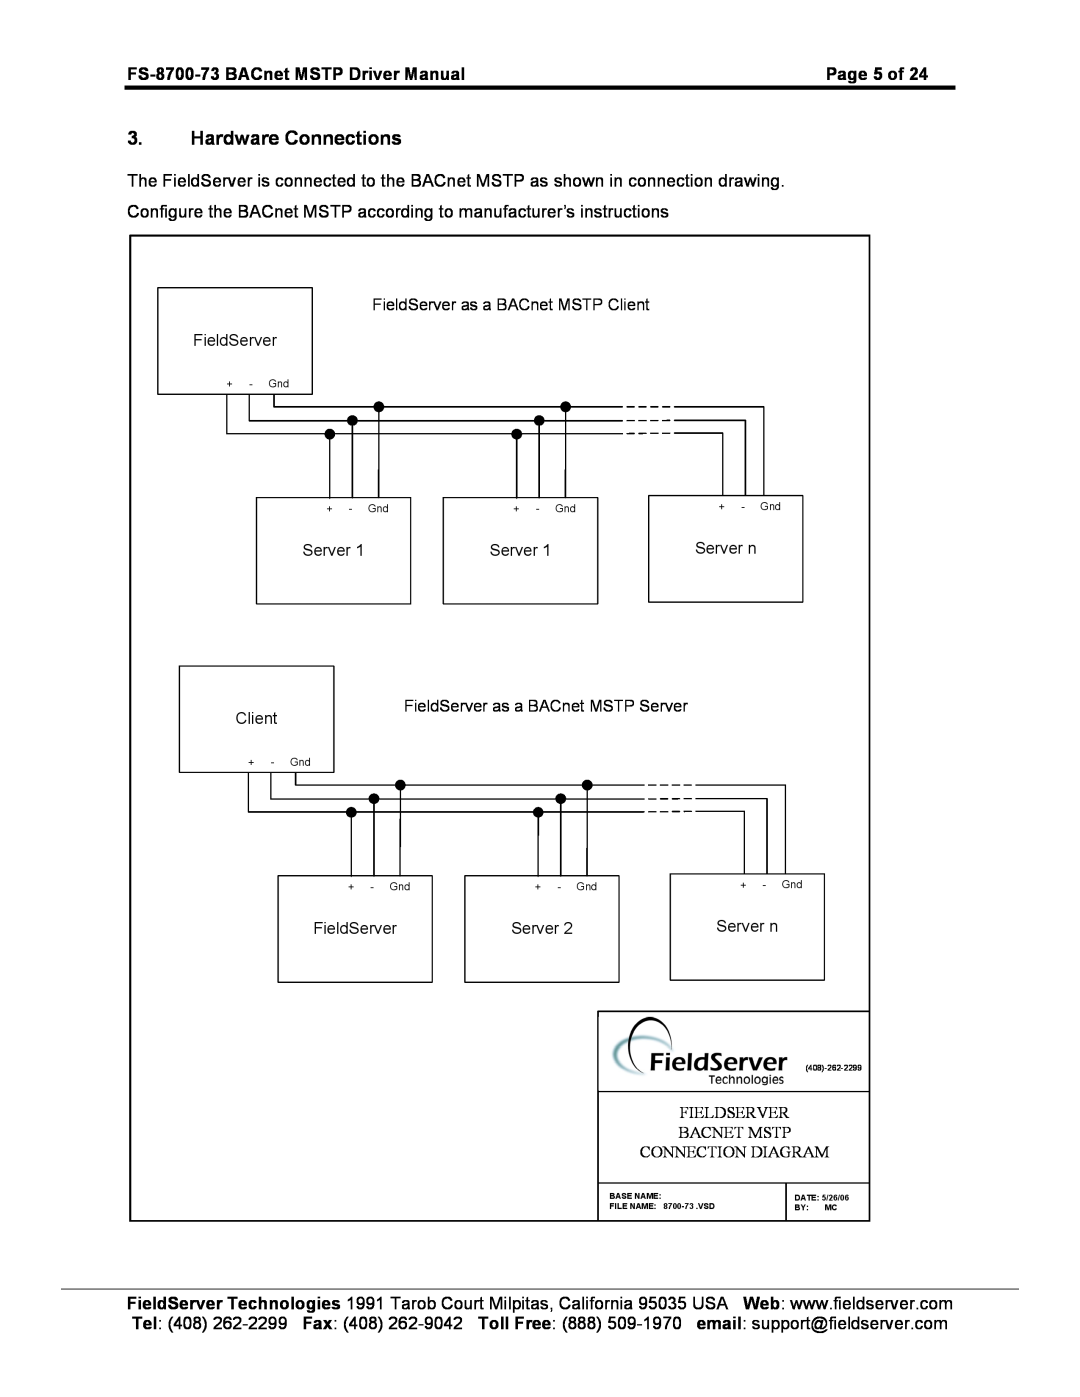 FieldServer FS-8700-73 instruction manual Hardware Connections, Fieldserver Bacnet Mstp Connection Diagram 